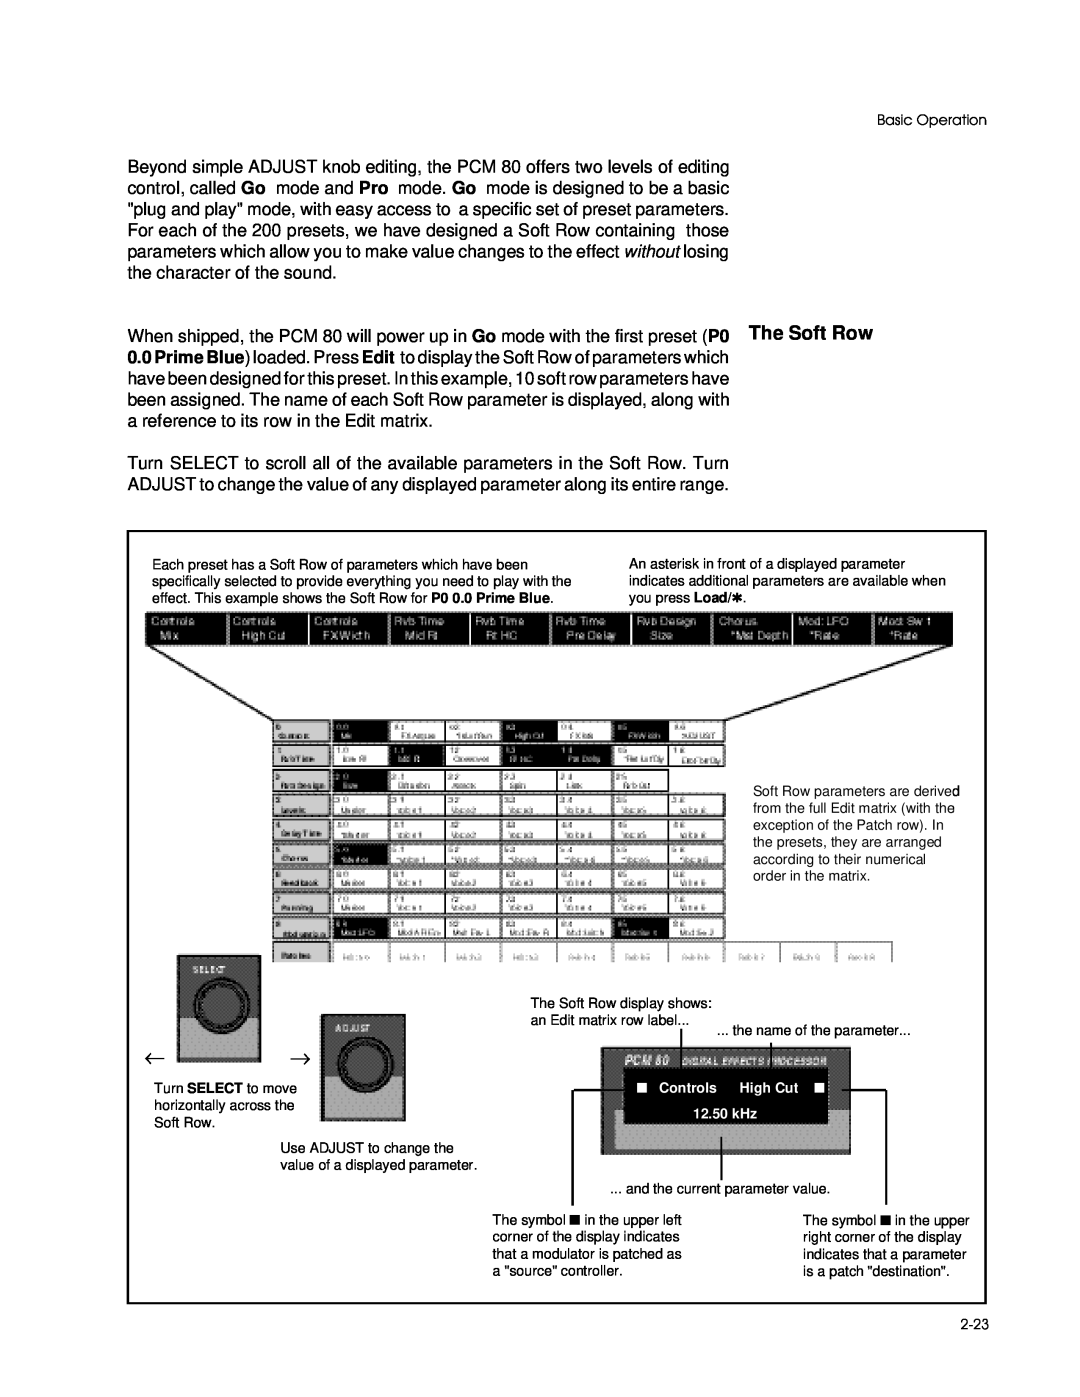 Lexicon PCM 80 manual The Soft Row 